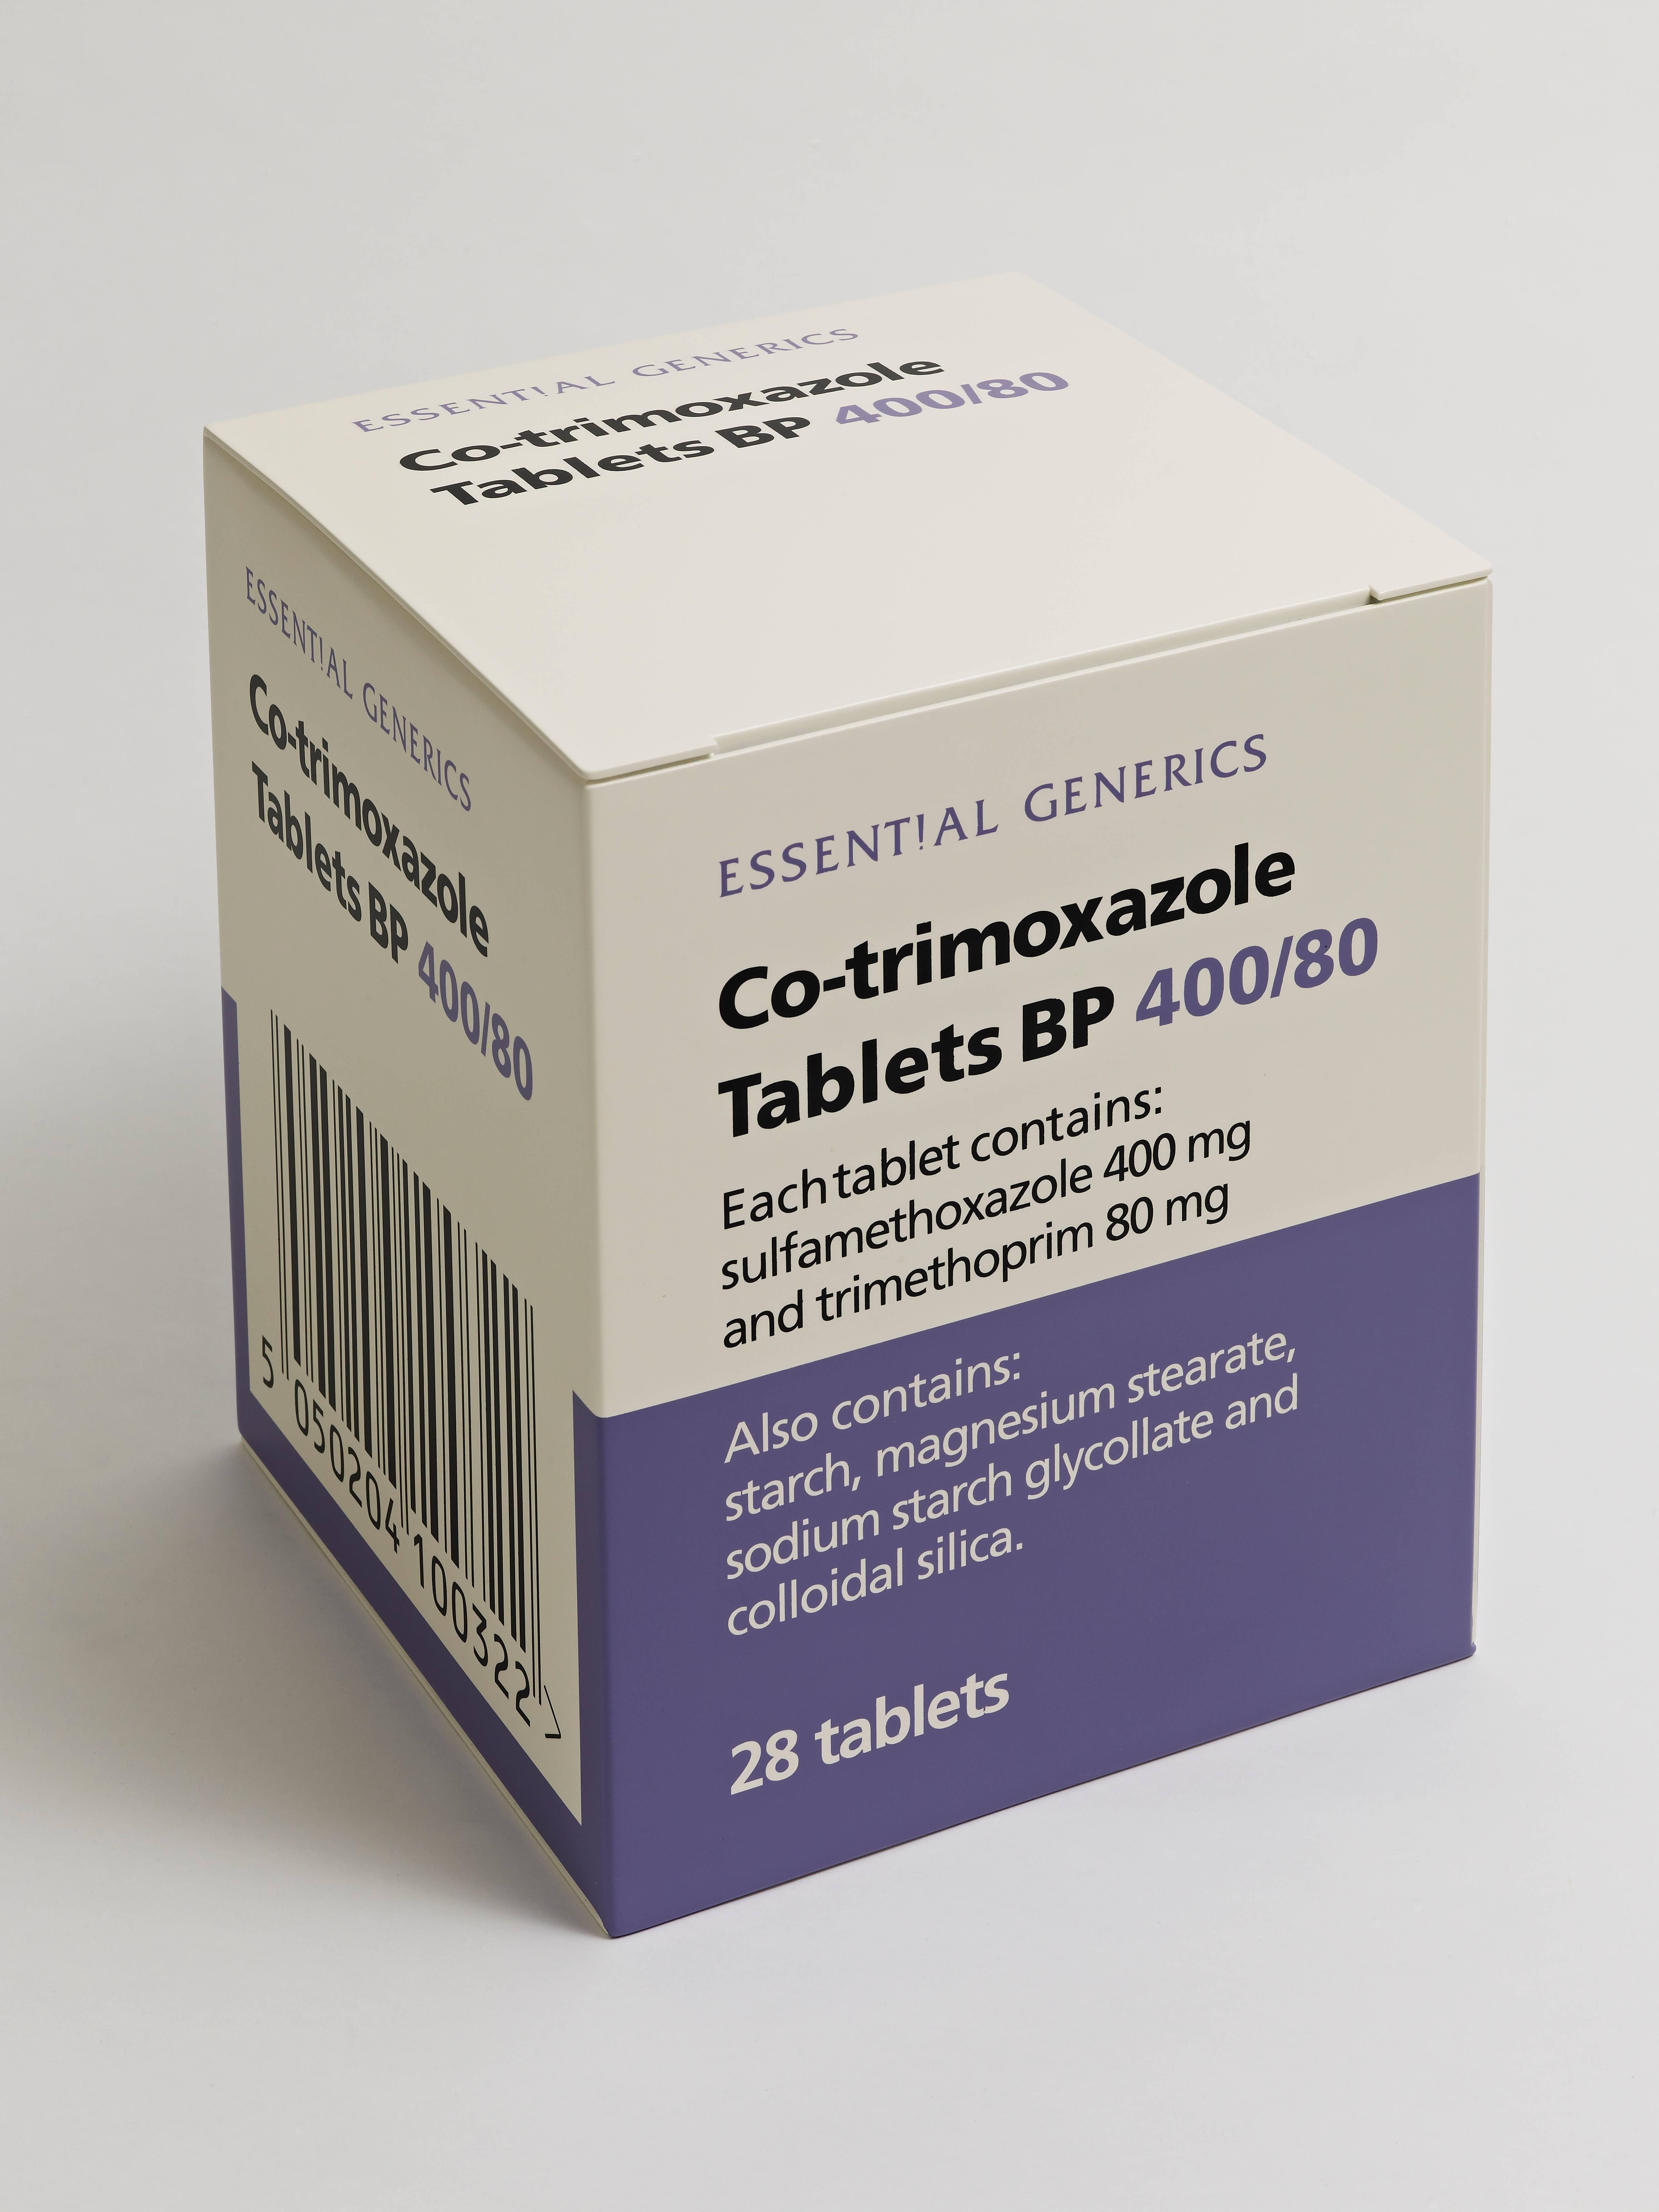 Co-Trimoxazole Tablets BP 400/80 - Sculpture by Damien Hirst